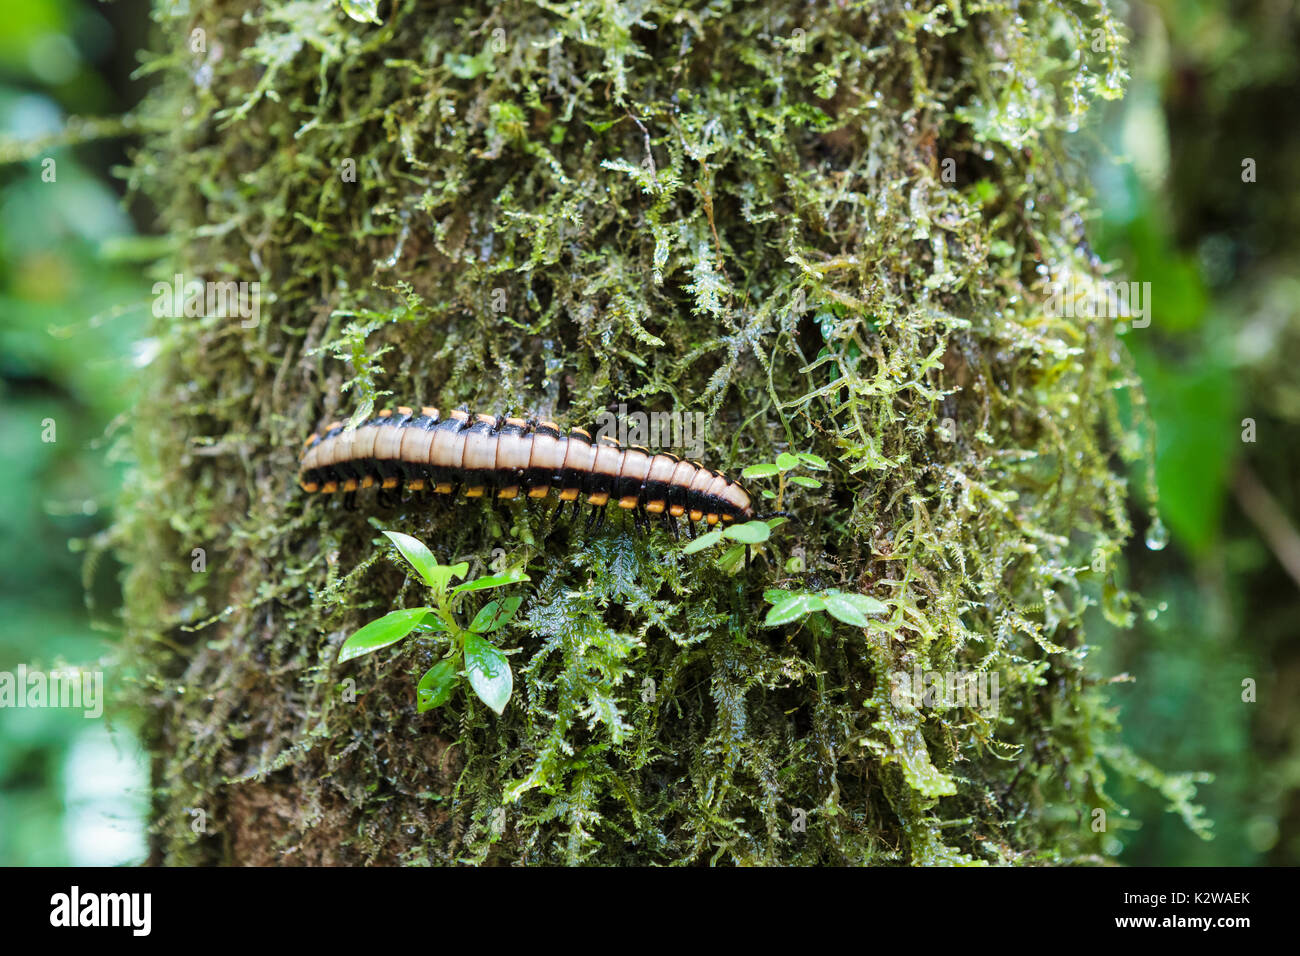 Flat-backed millipede on tree Stock Photo